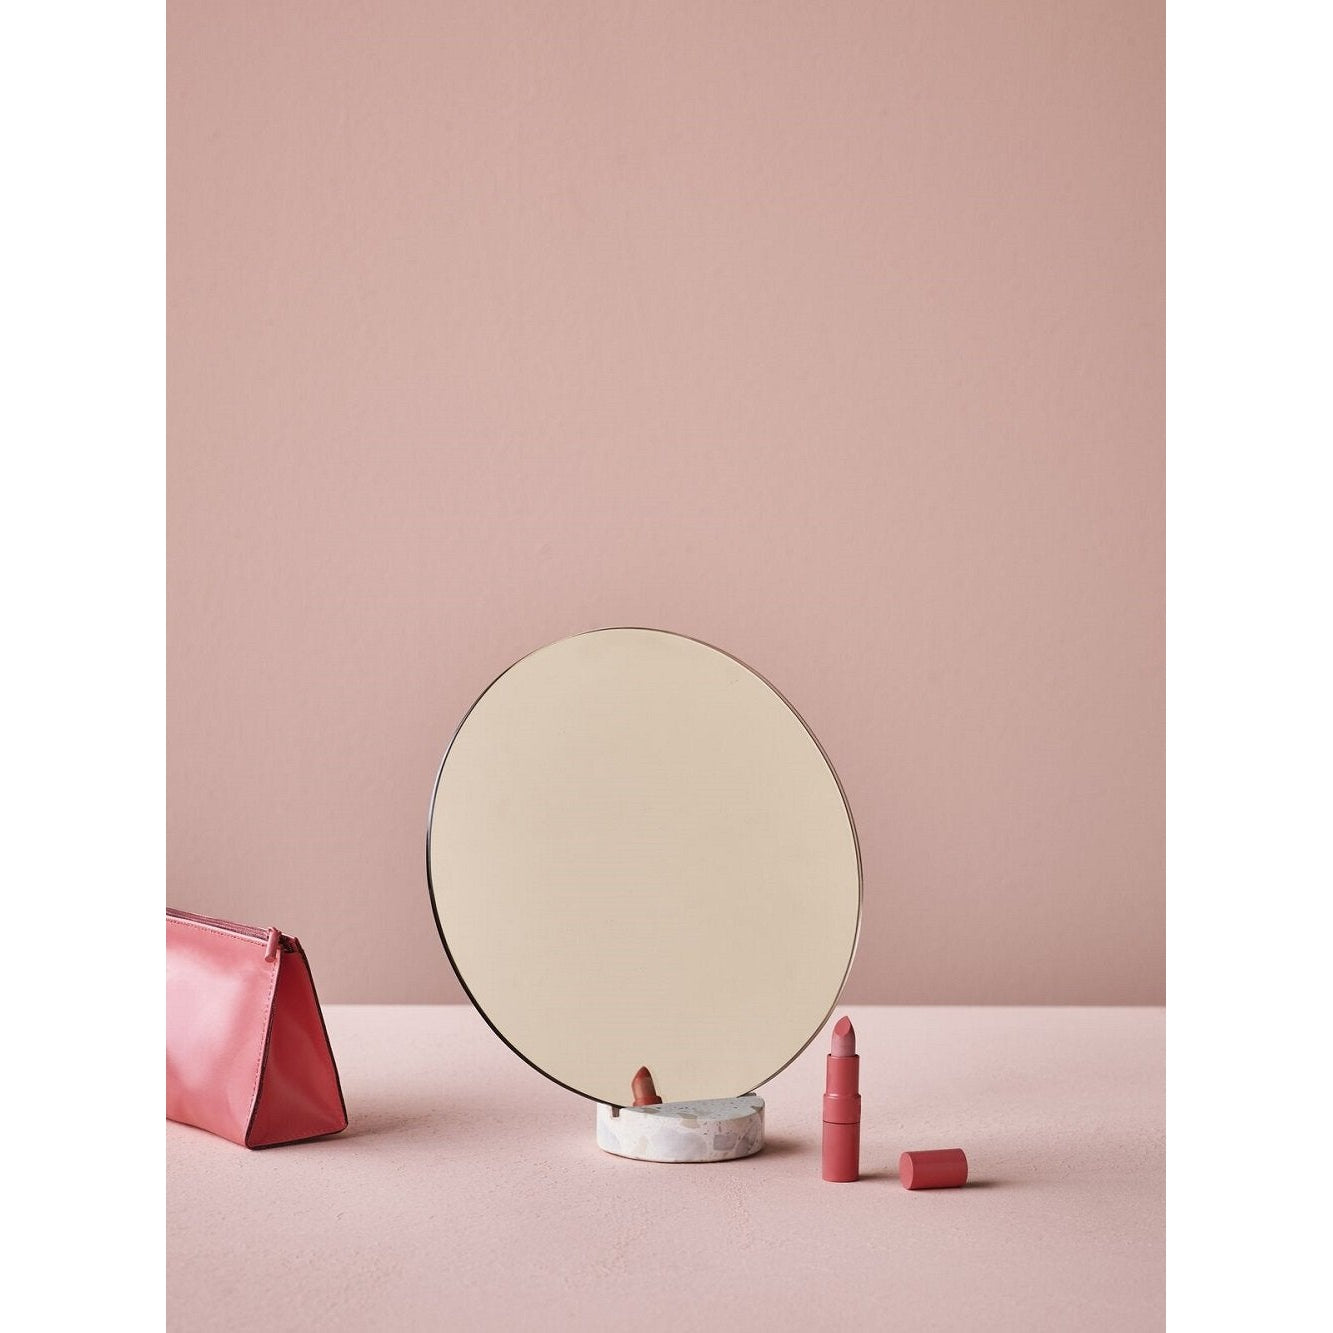 Lucie Kaas Erat speil hvit, 25 cm